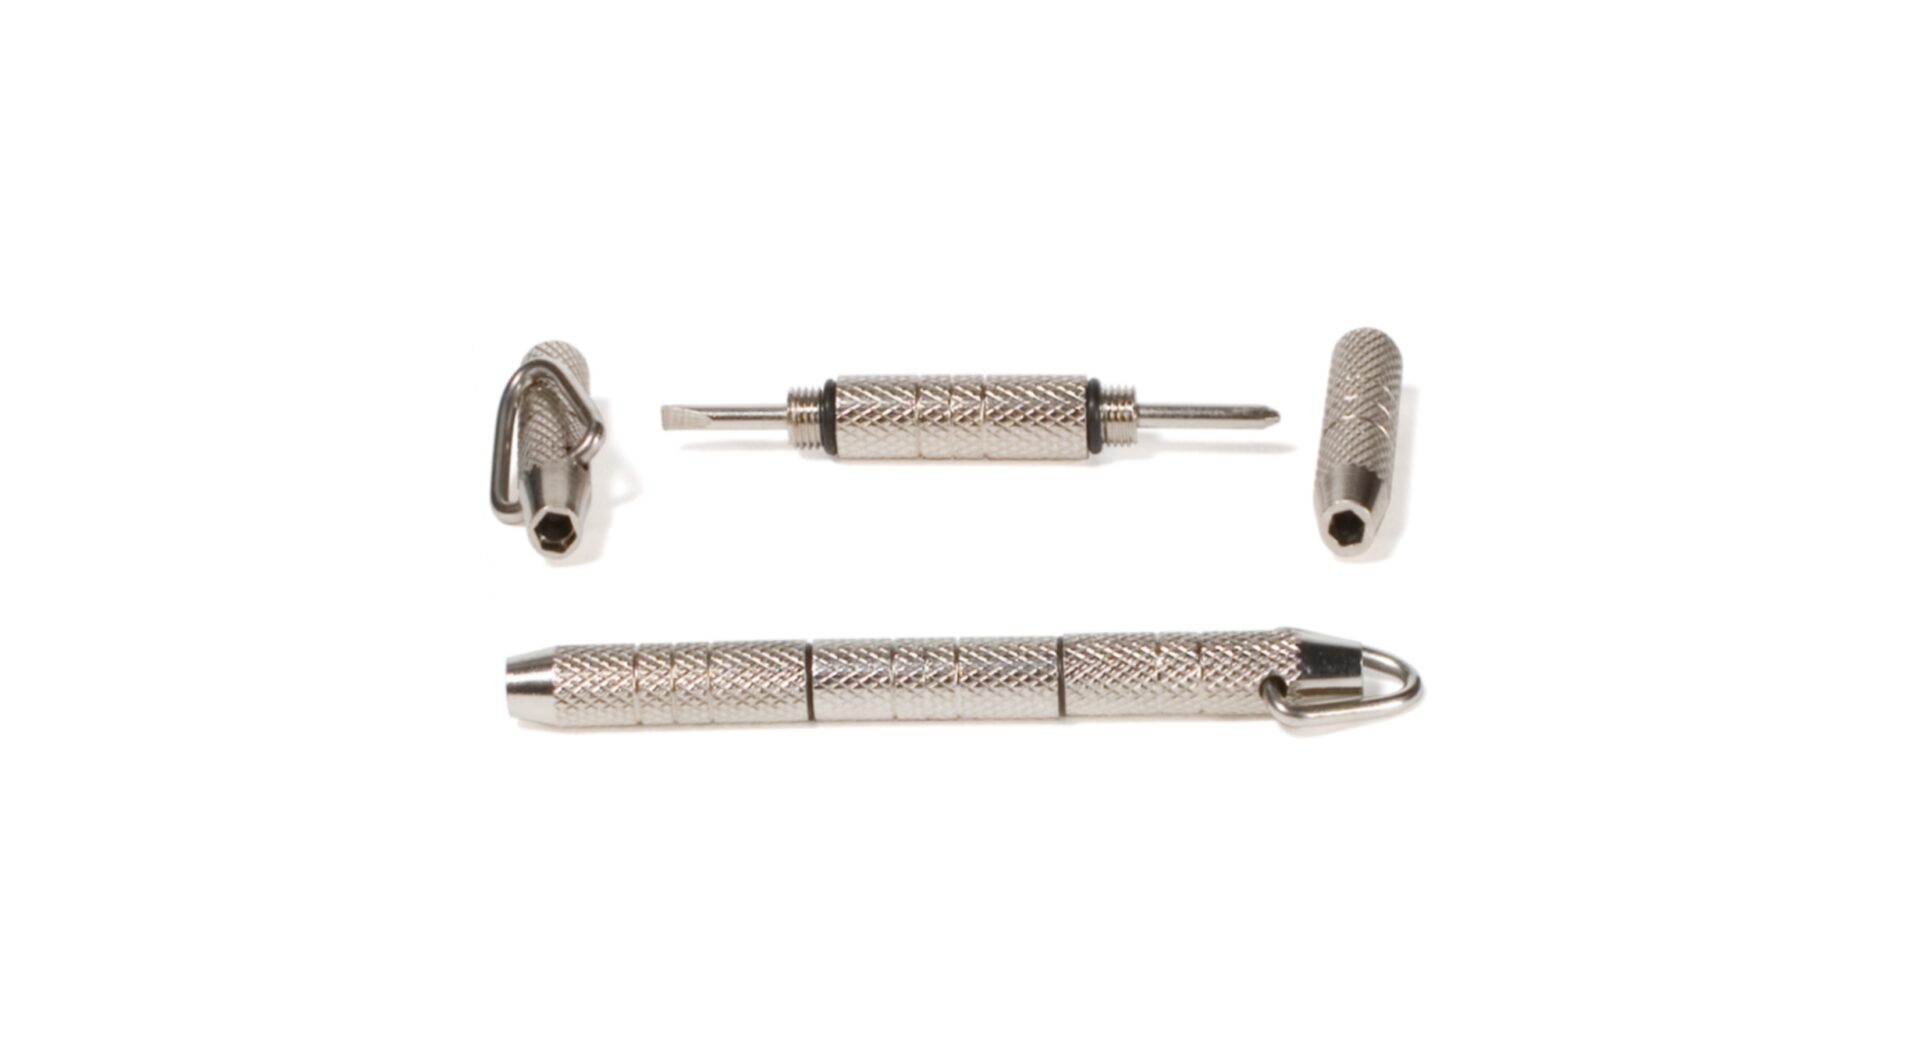 keychain screwdriver kit